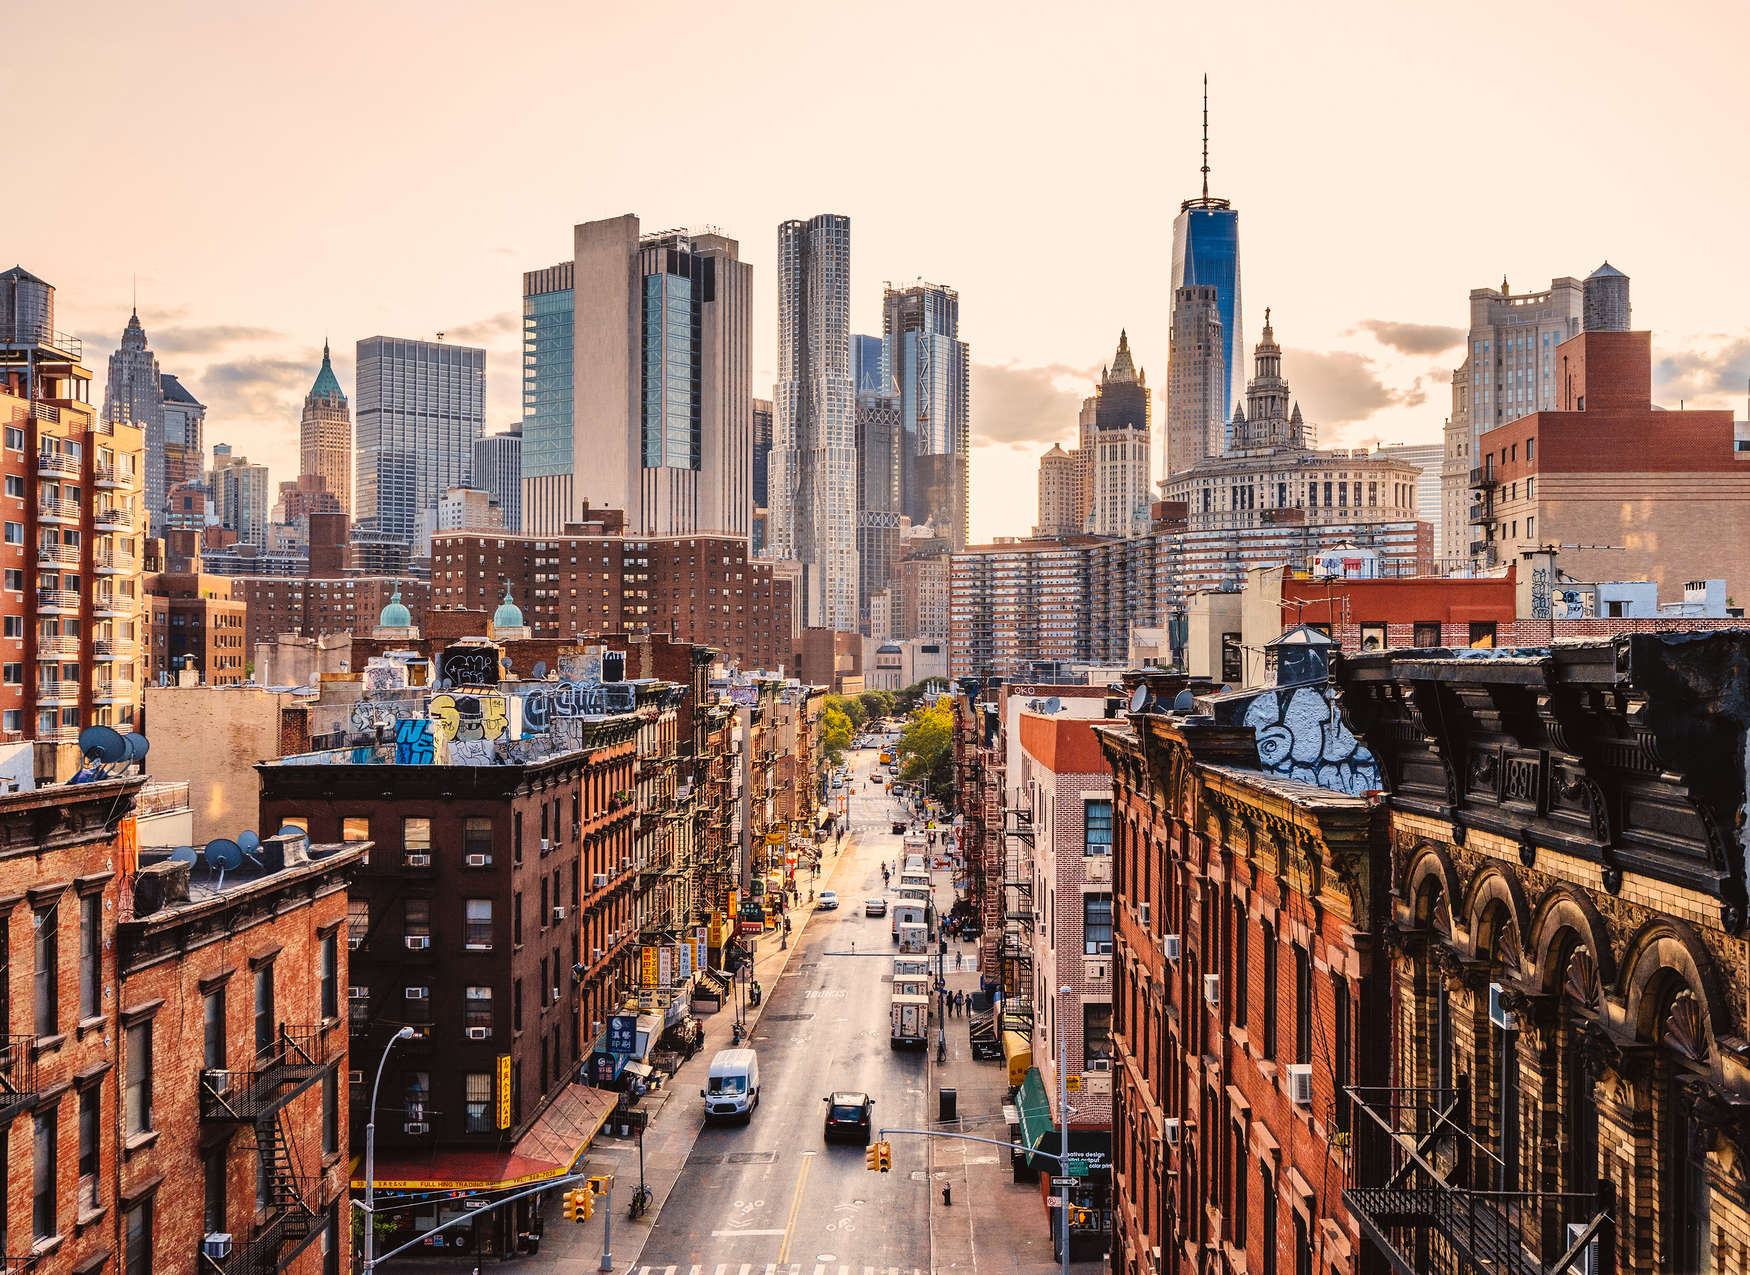             Skyline Fototapete New York – Braun, Grau, Beige
        